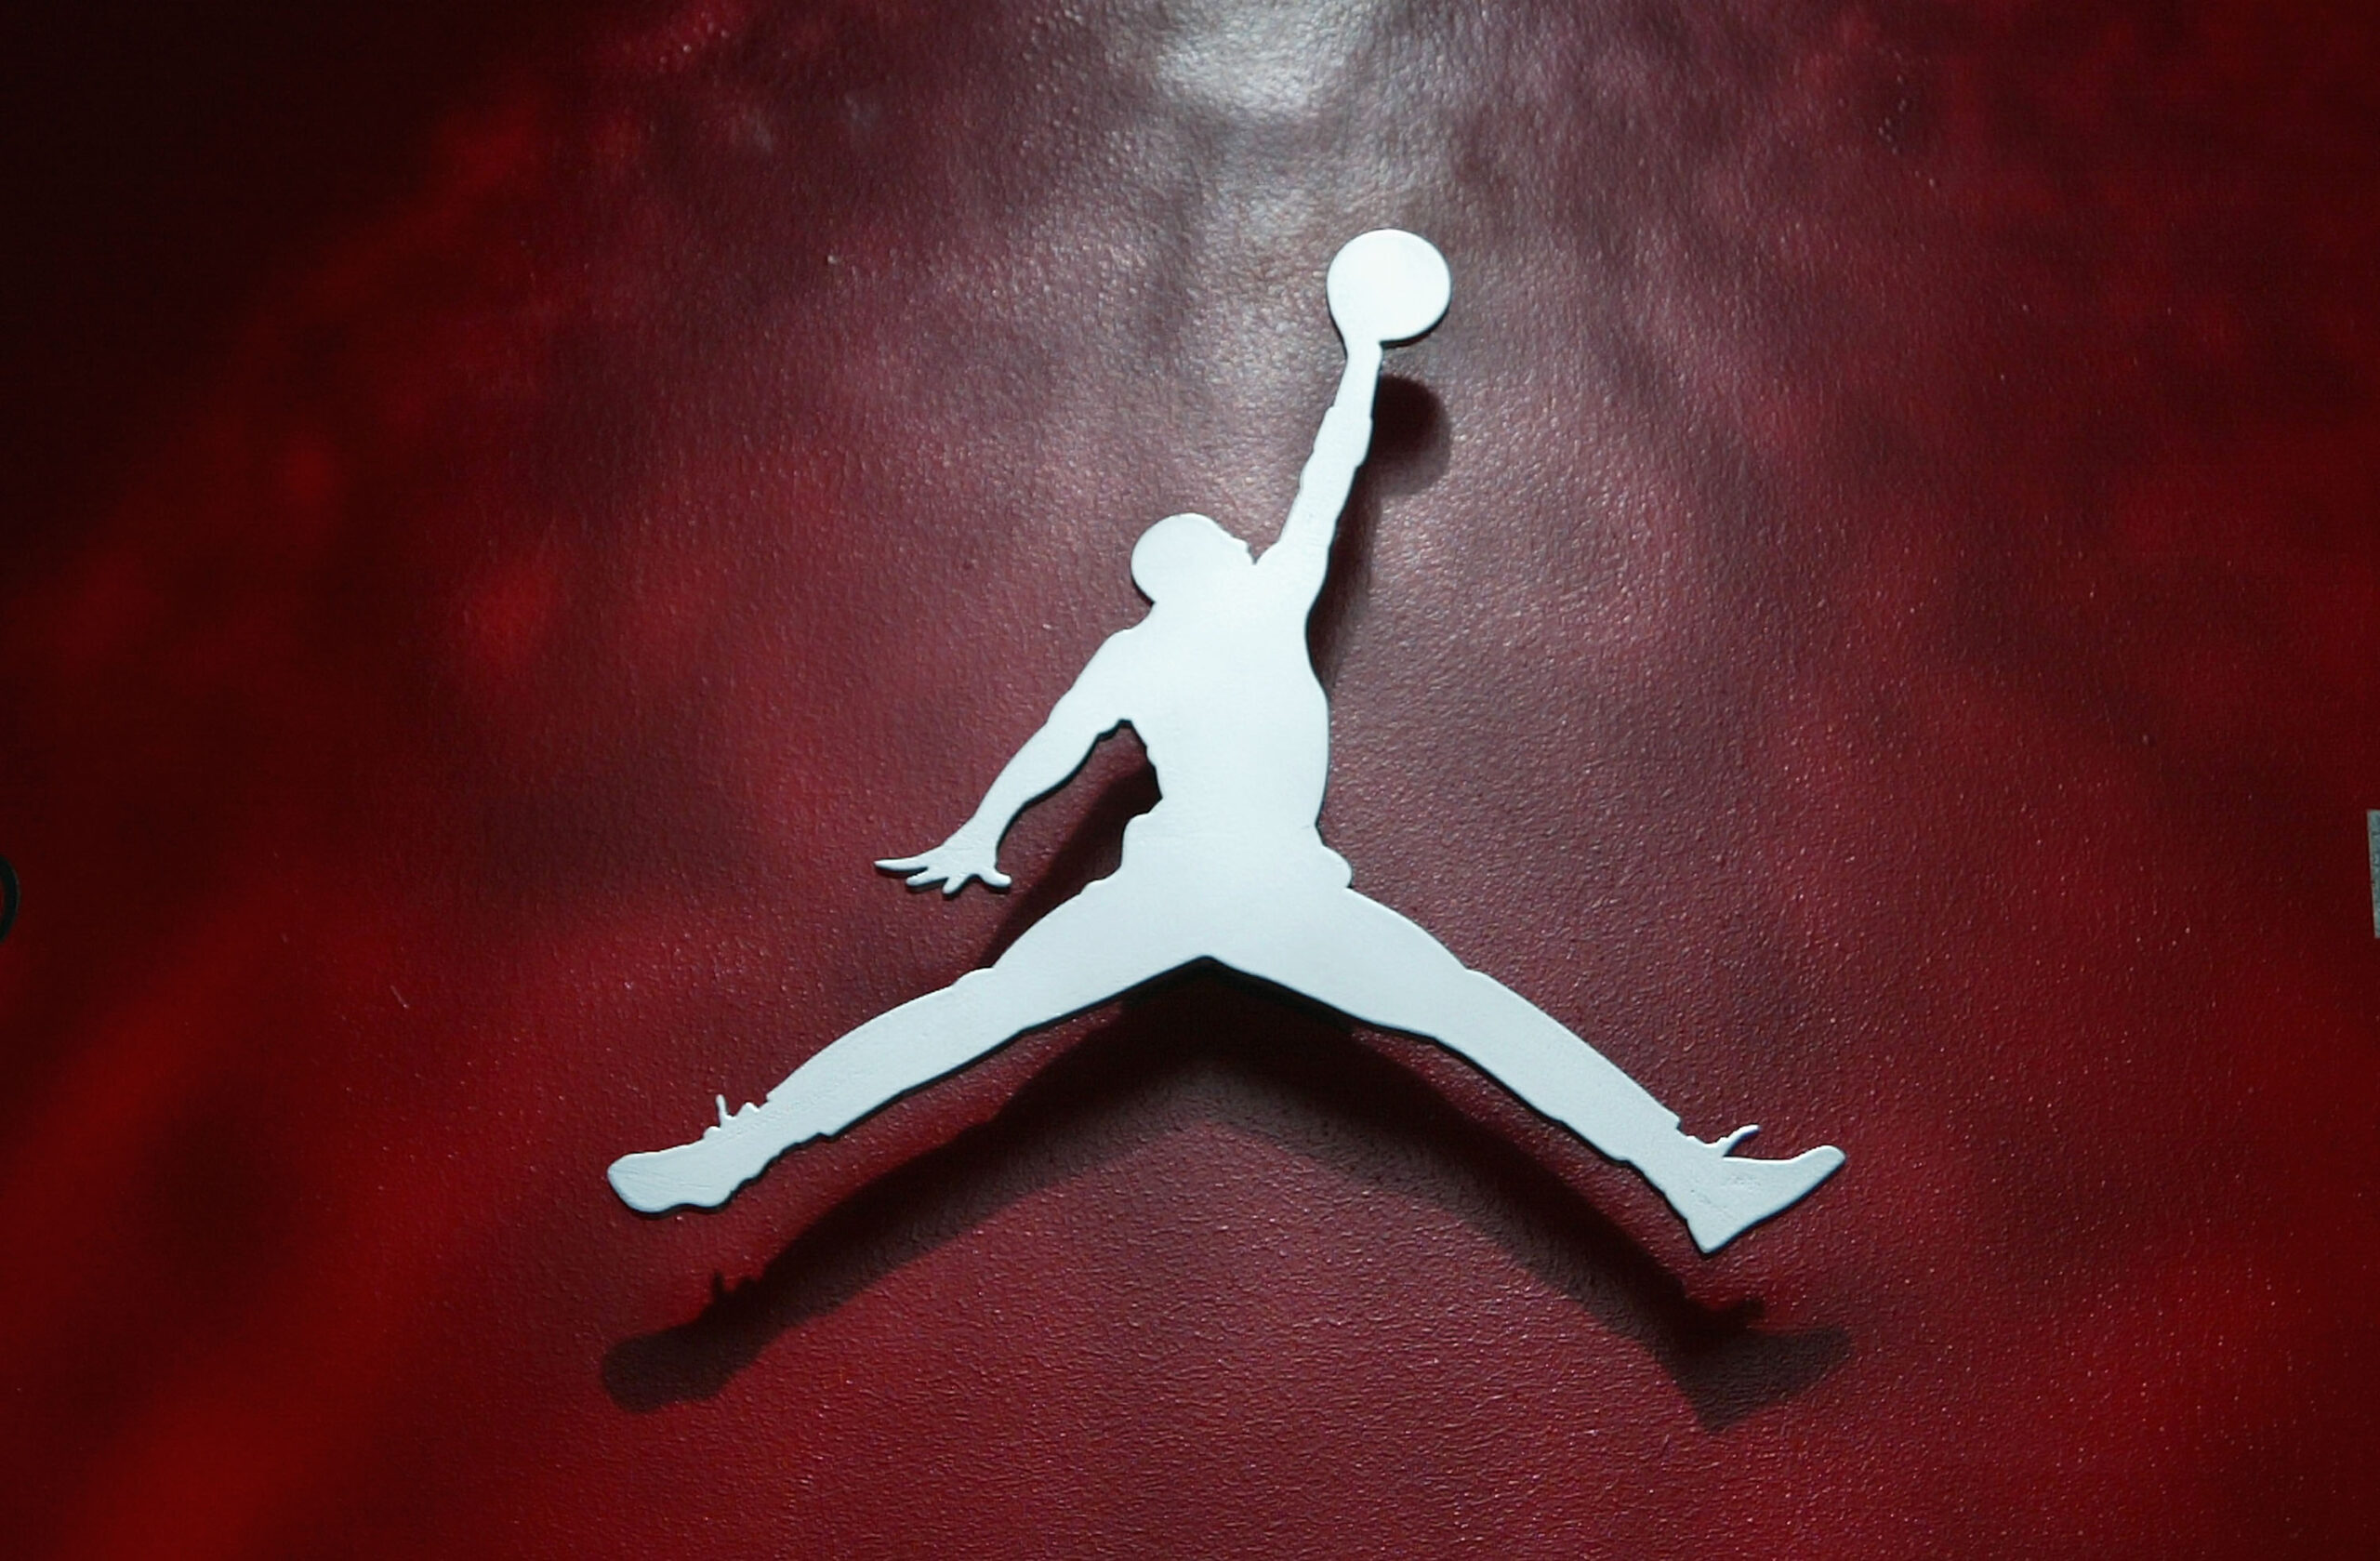 Air Jordan 5 “Olive” On-Foot Photos